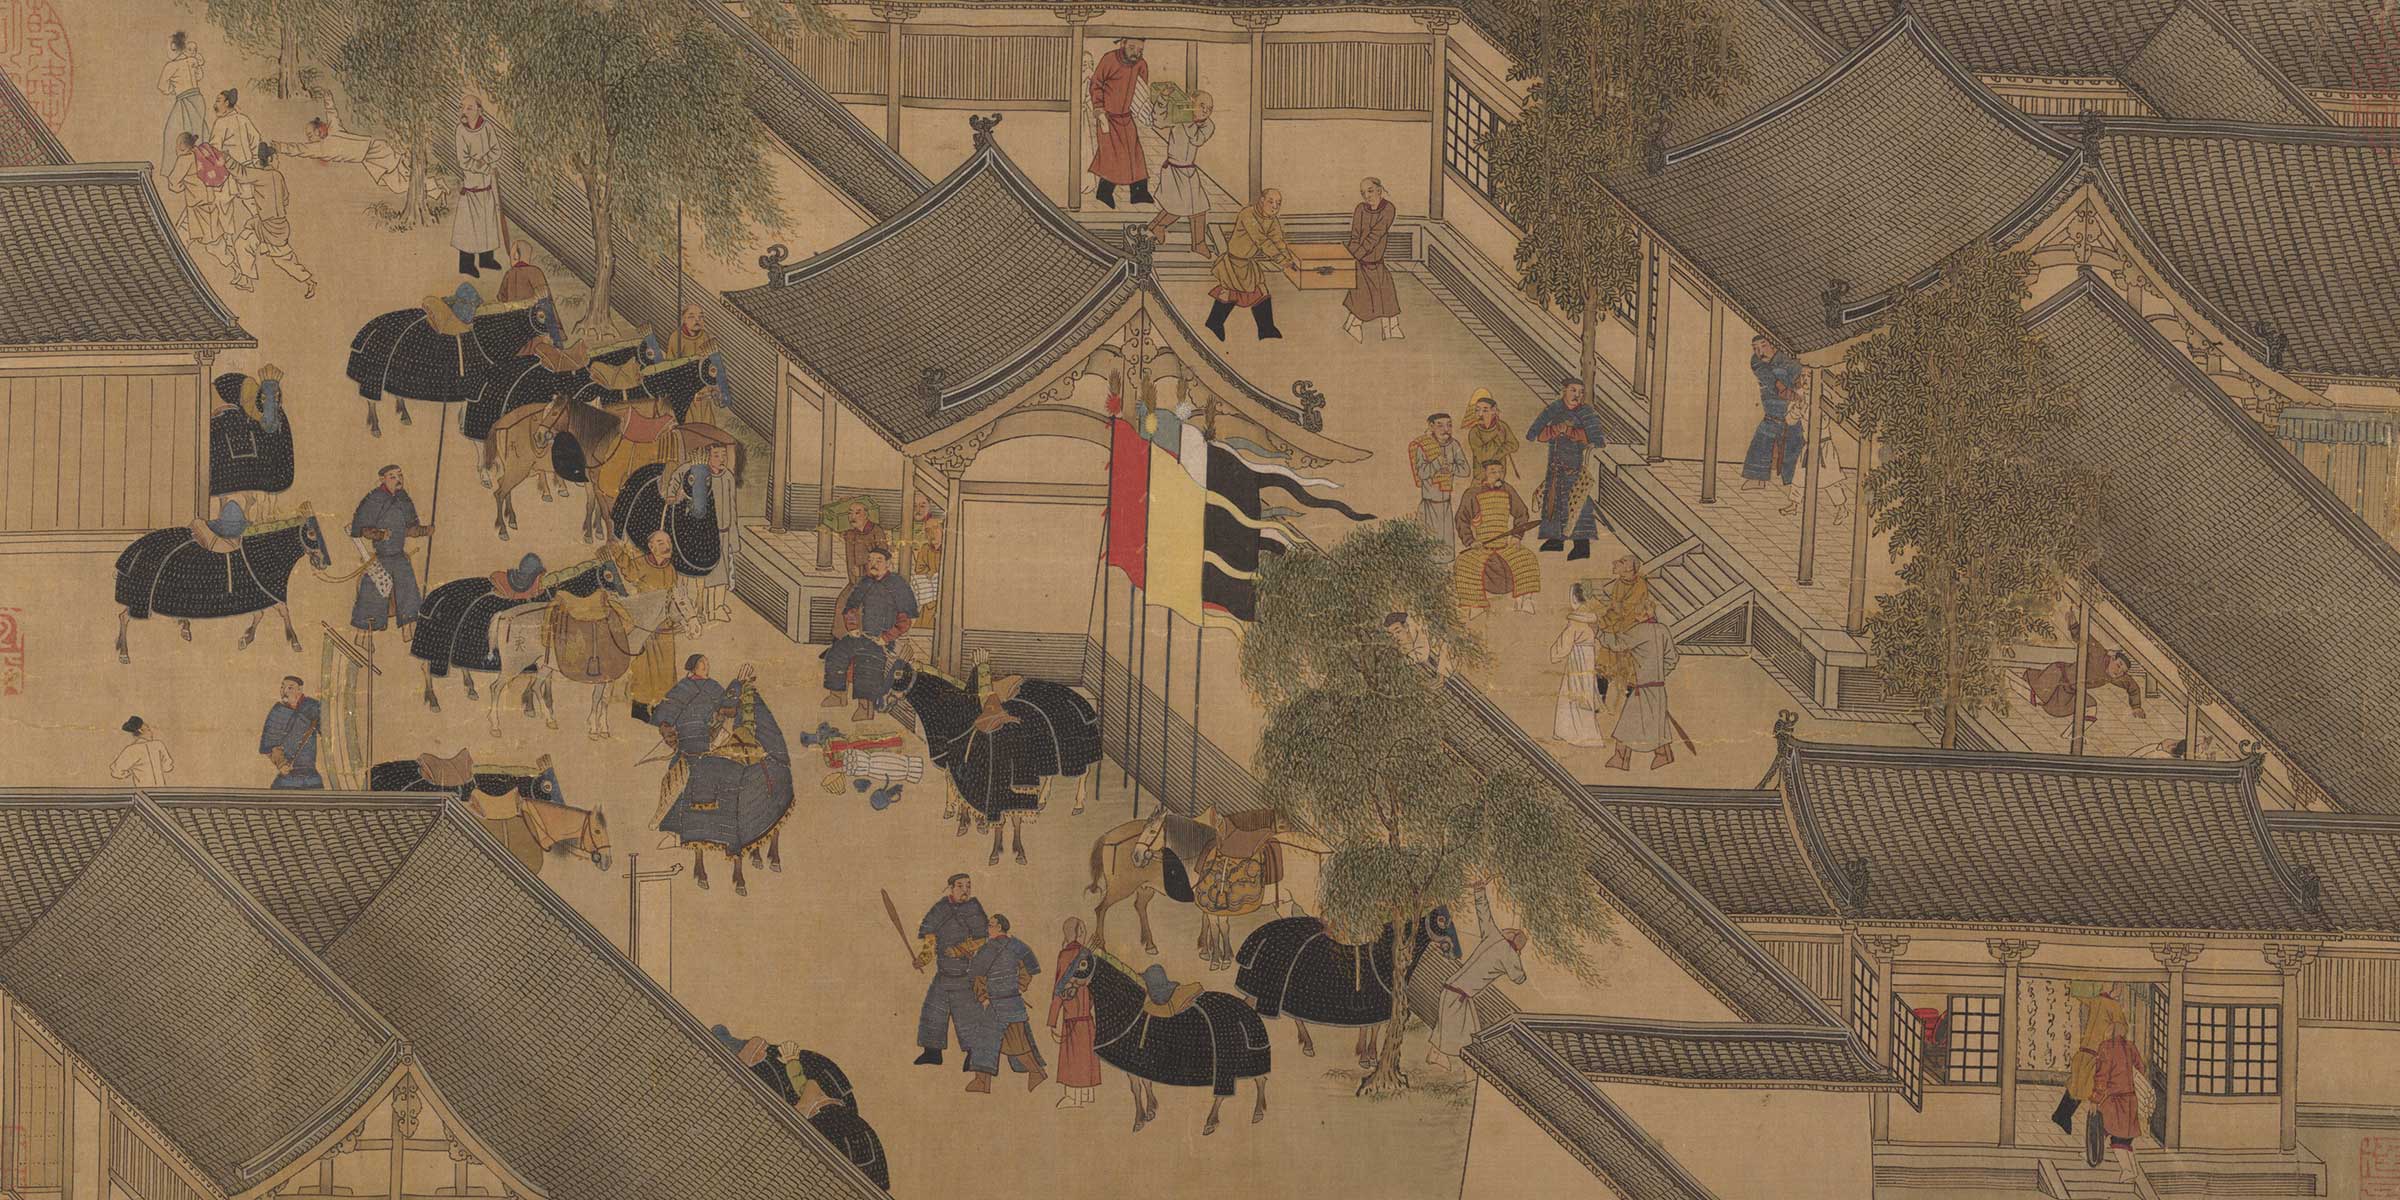 Scroll of nomads on horseback invading a courtyard